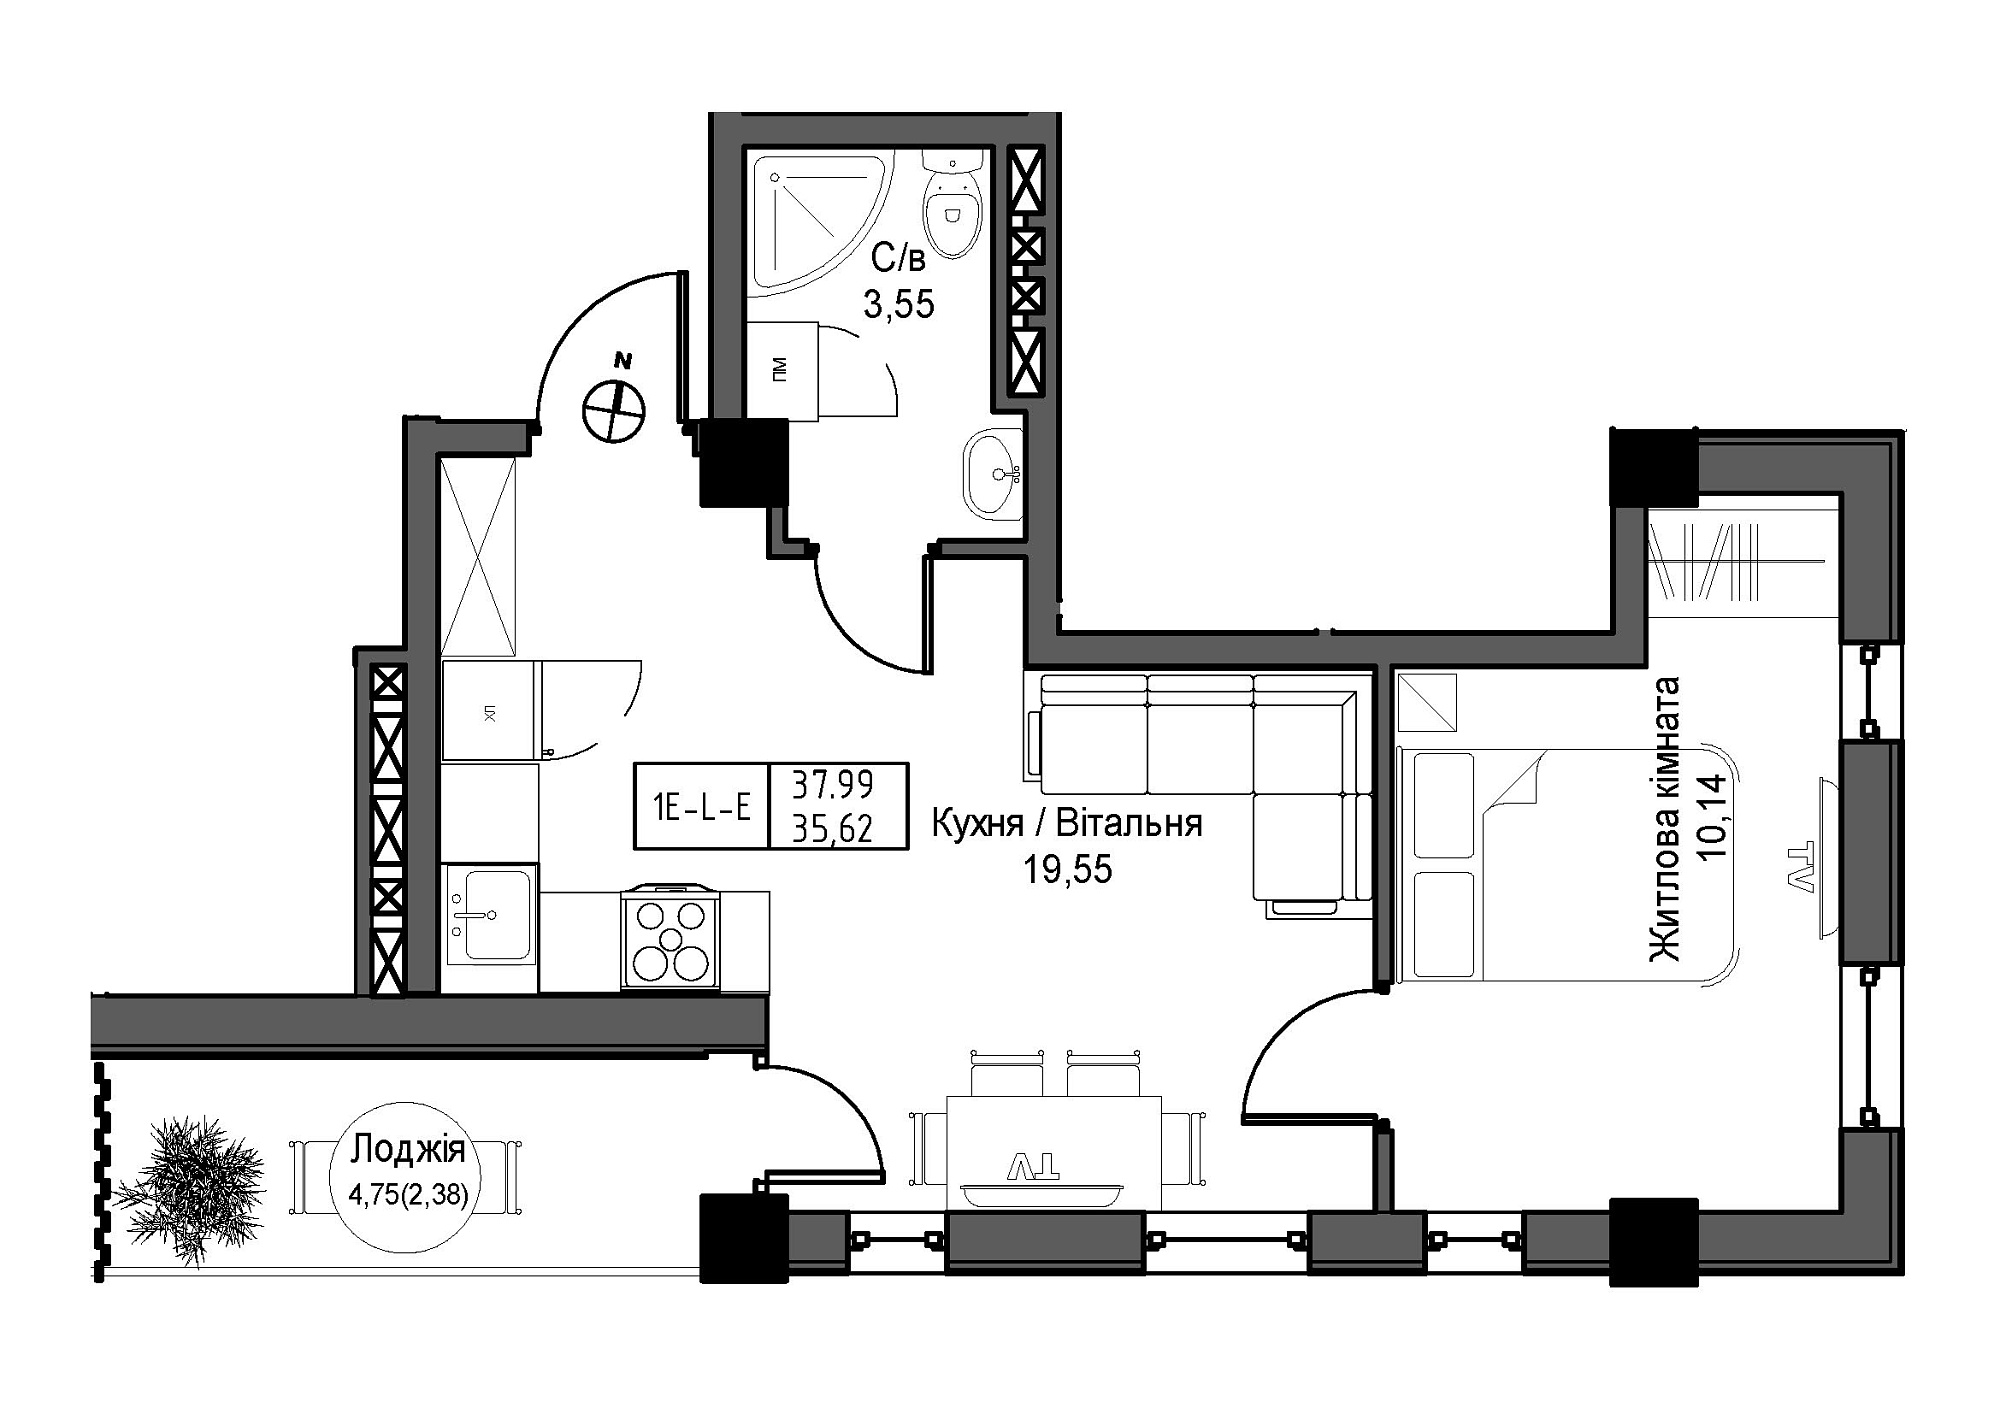 Планування 1-к квартира площею 35.62м2, UM-007-07/0009.